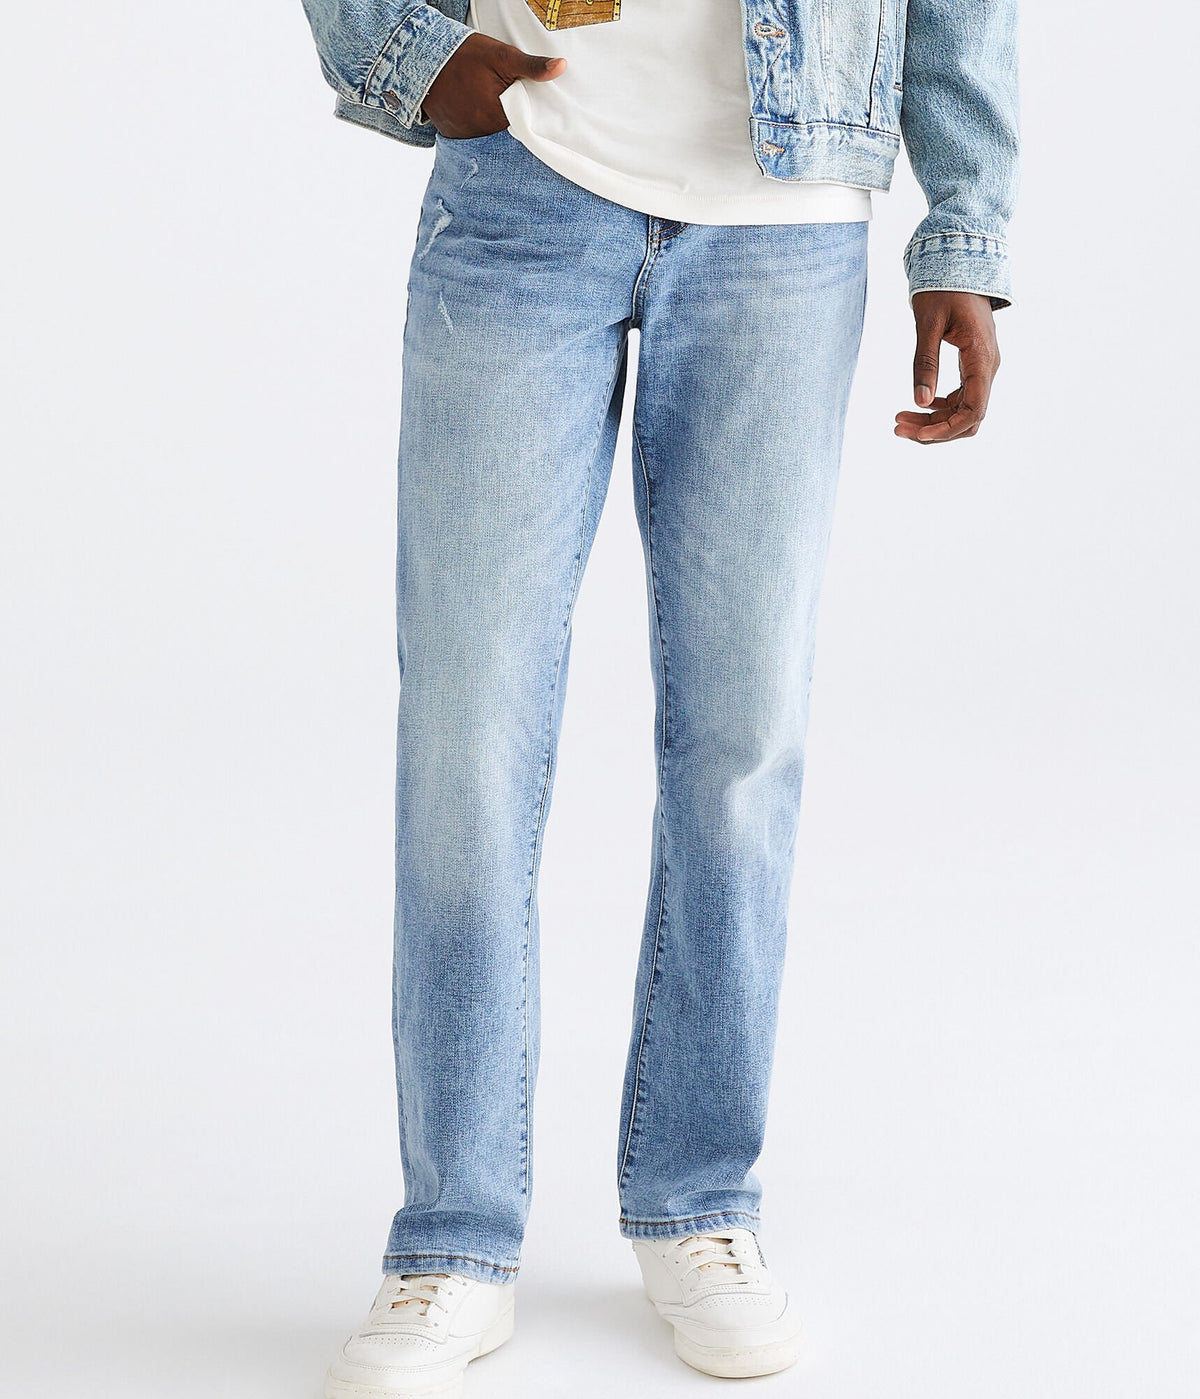 Aeropostale Mens' Athletic Straight Premium Air Jean - Washed Denim - Size 33X30 - Cotton - Teen Fashion & Clothing Medium Wash